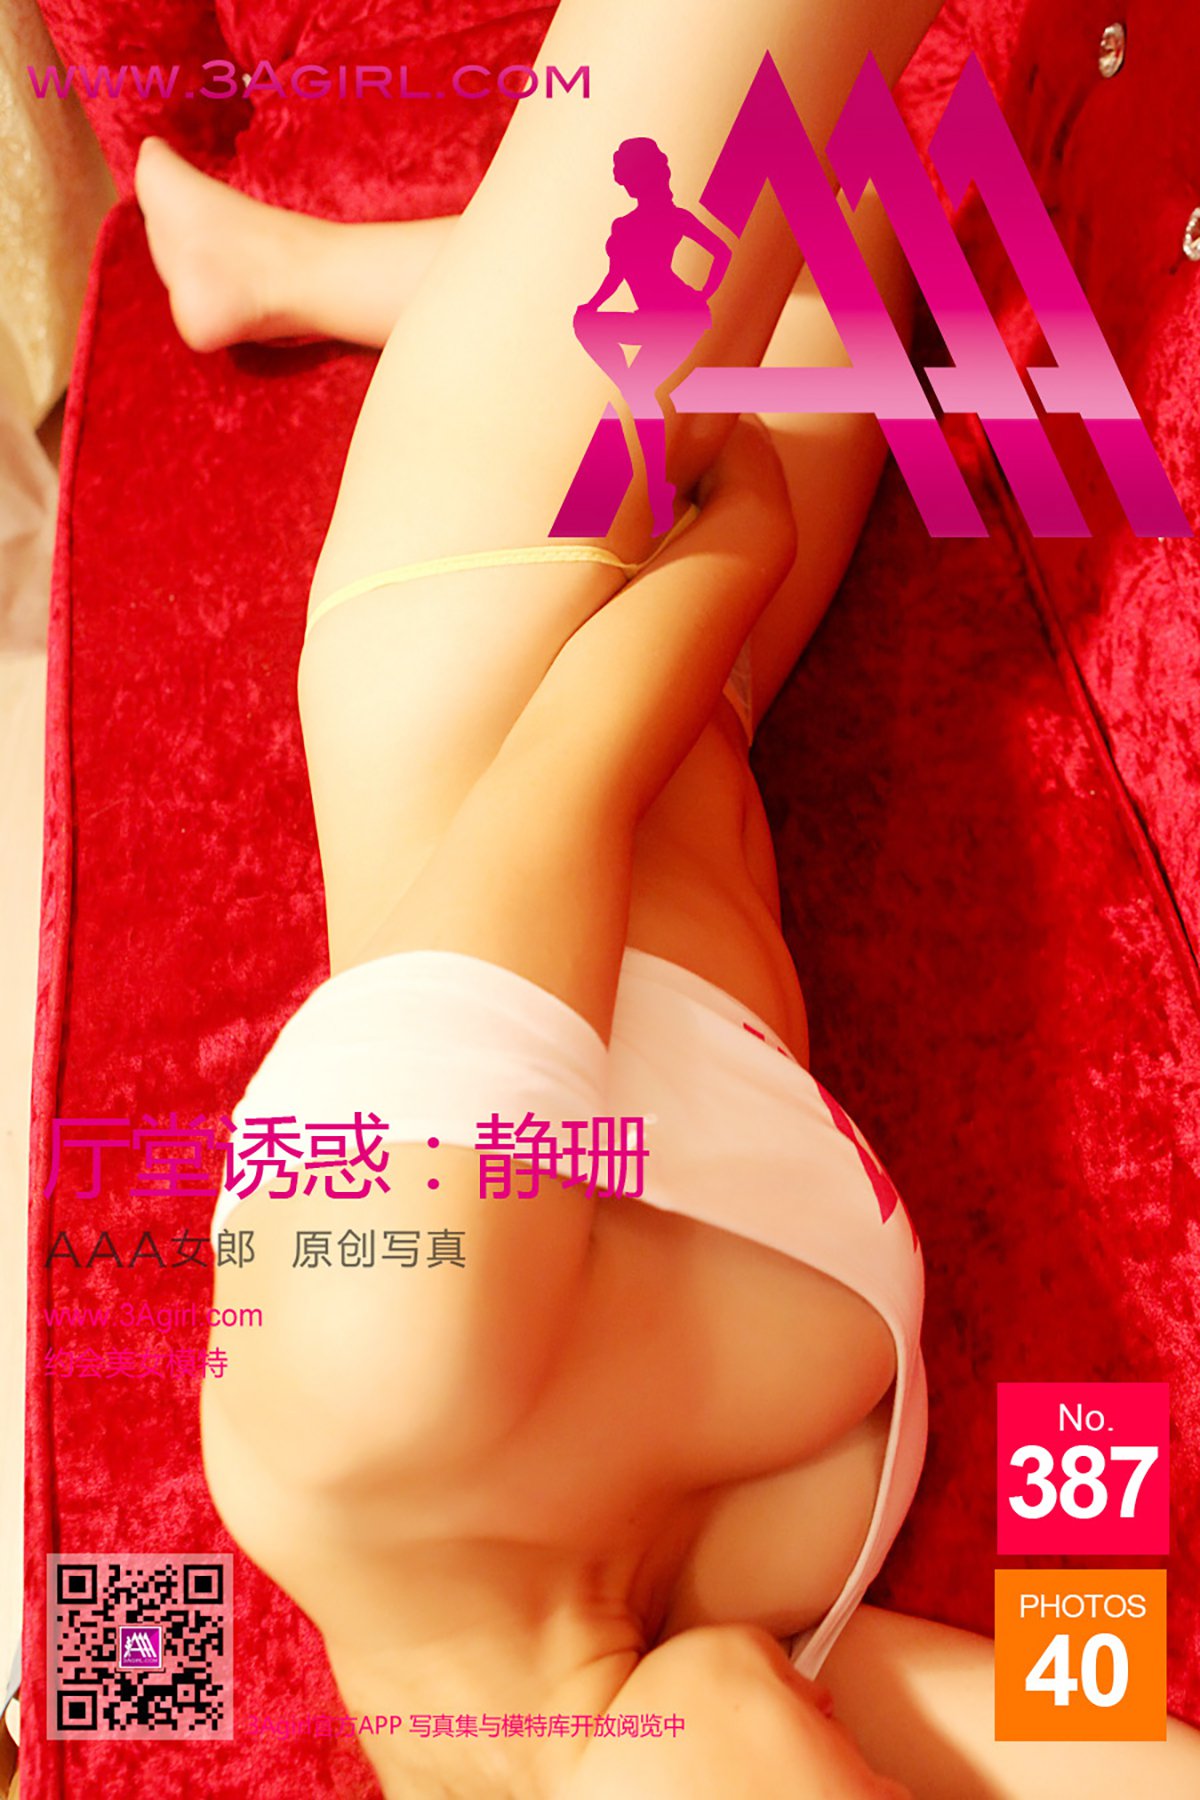 3Agirl No.387 Jing Shan